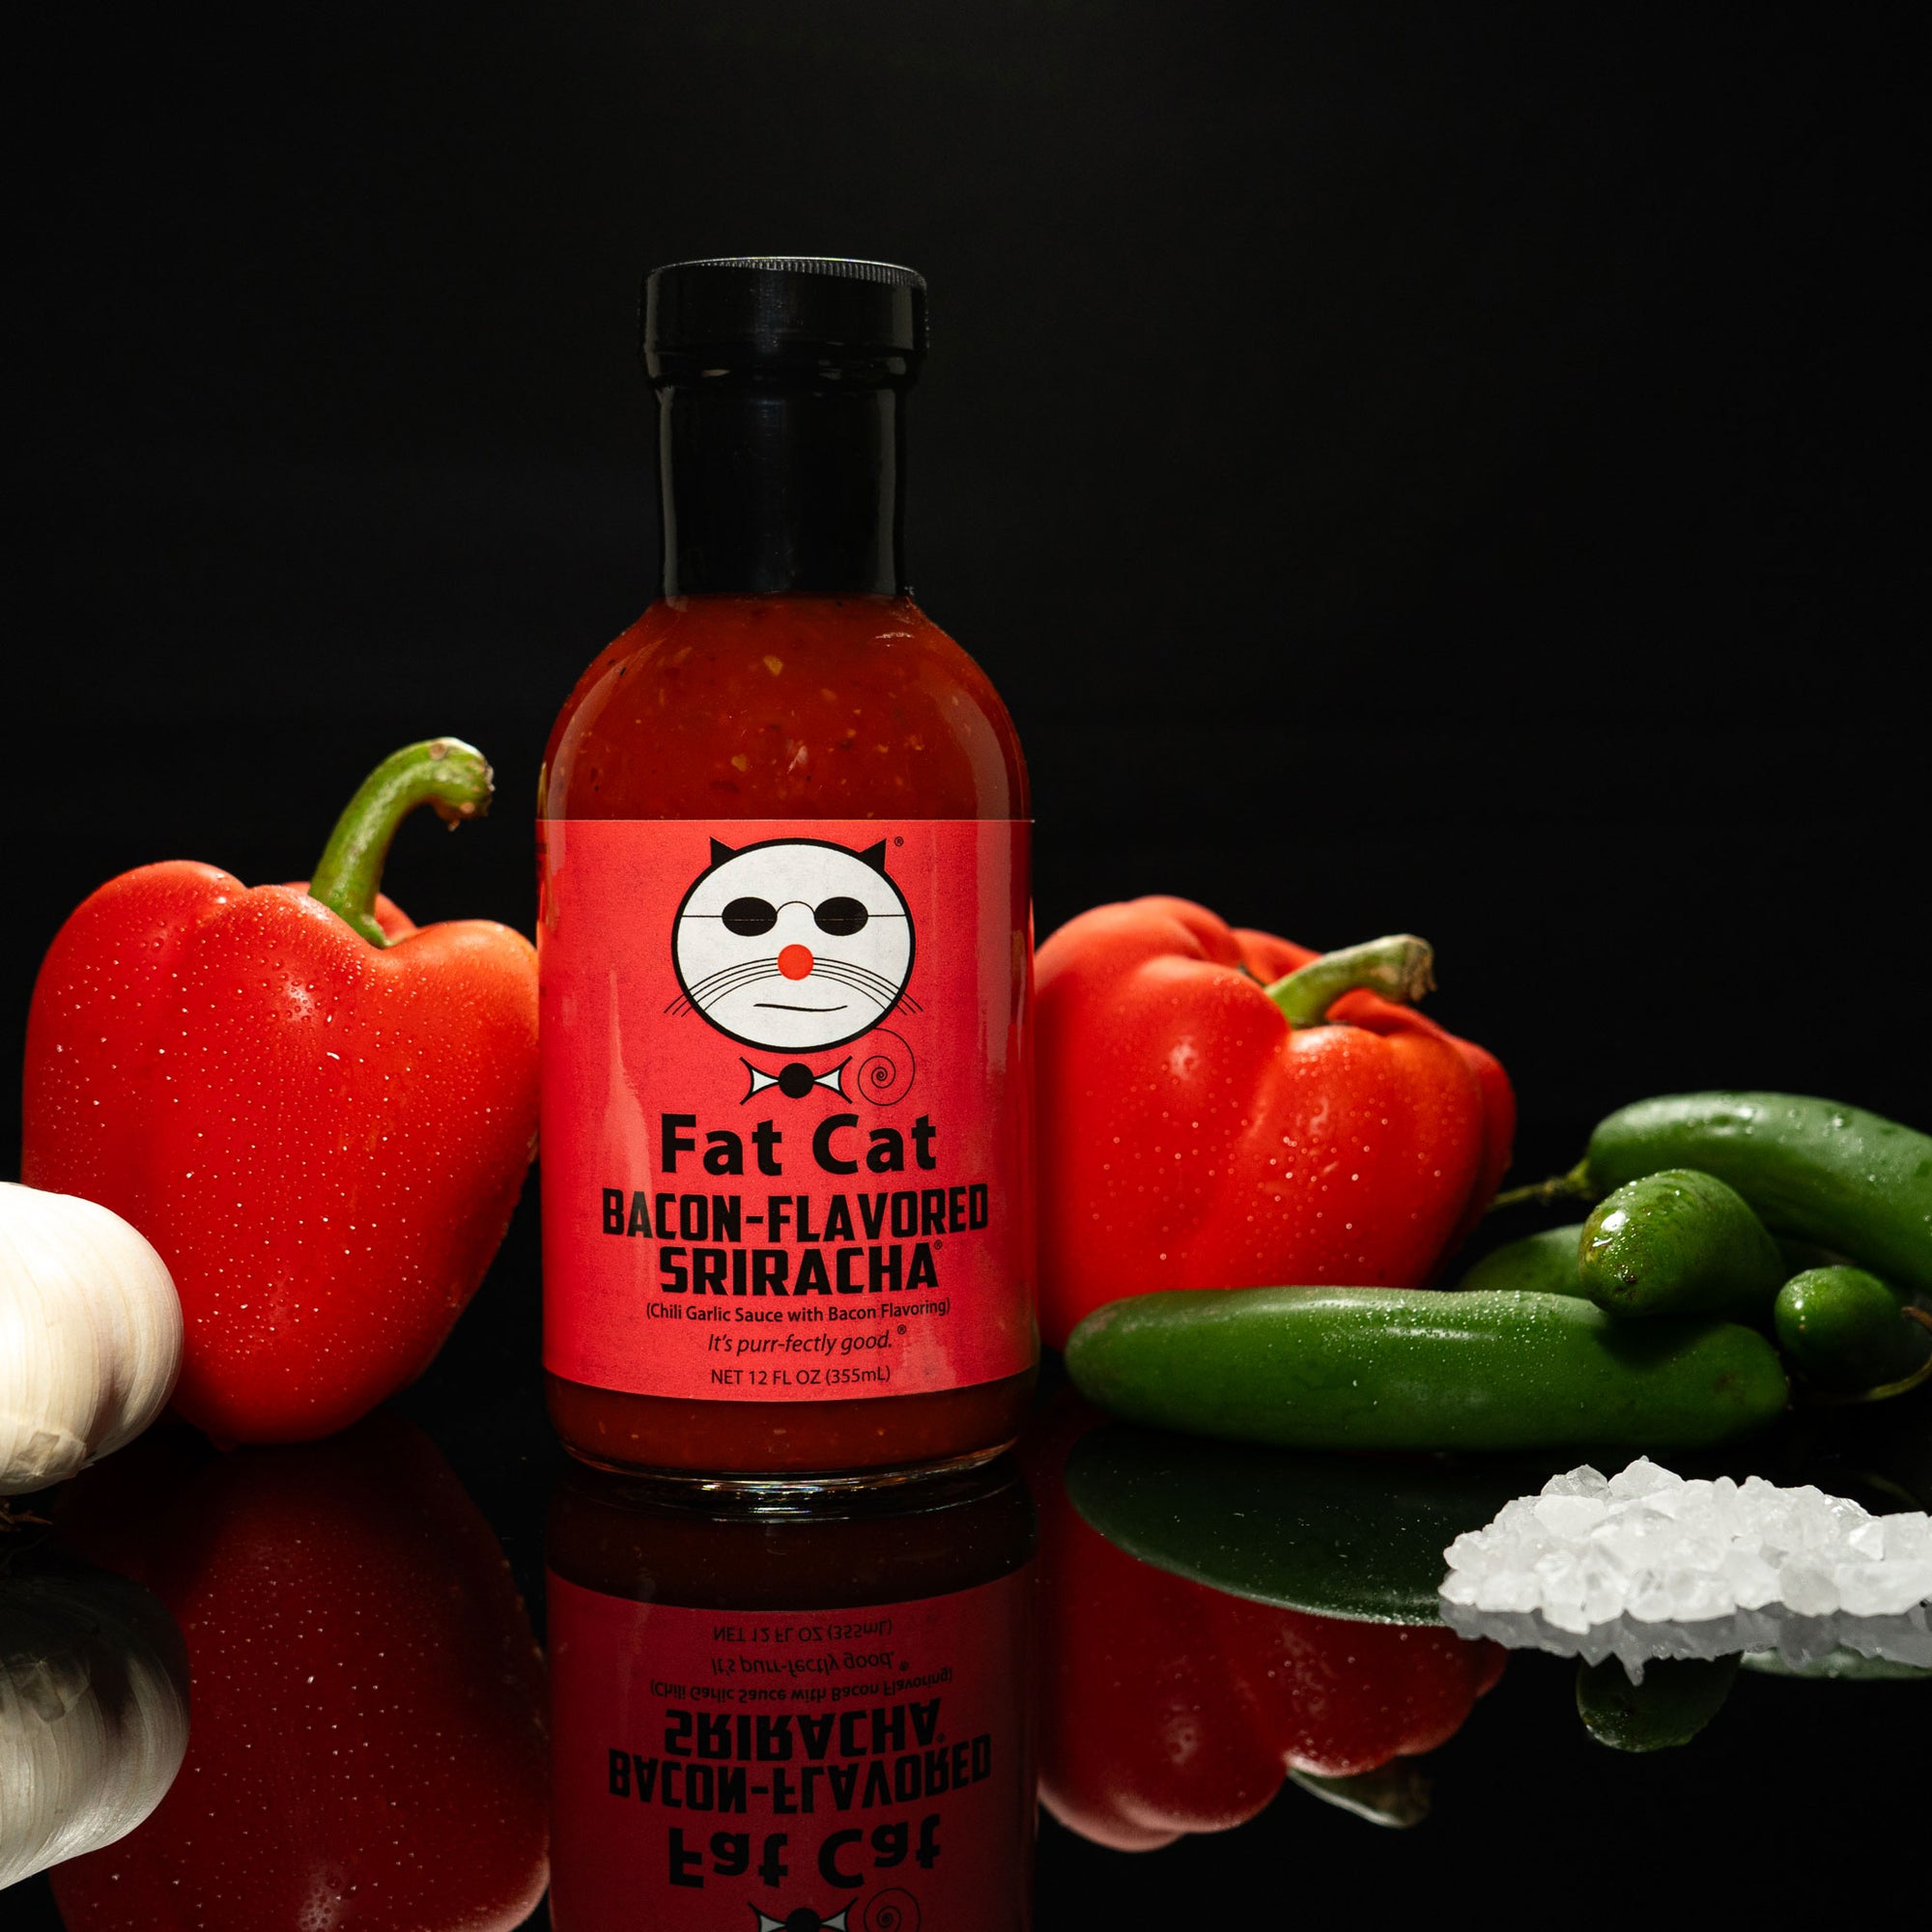 Heat Lovers 5 Bottle Hot Sauce Gift Box by Fat Cat Gourmet – Fat